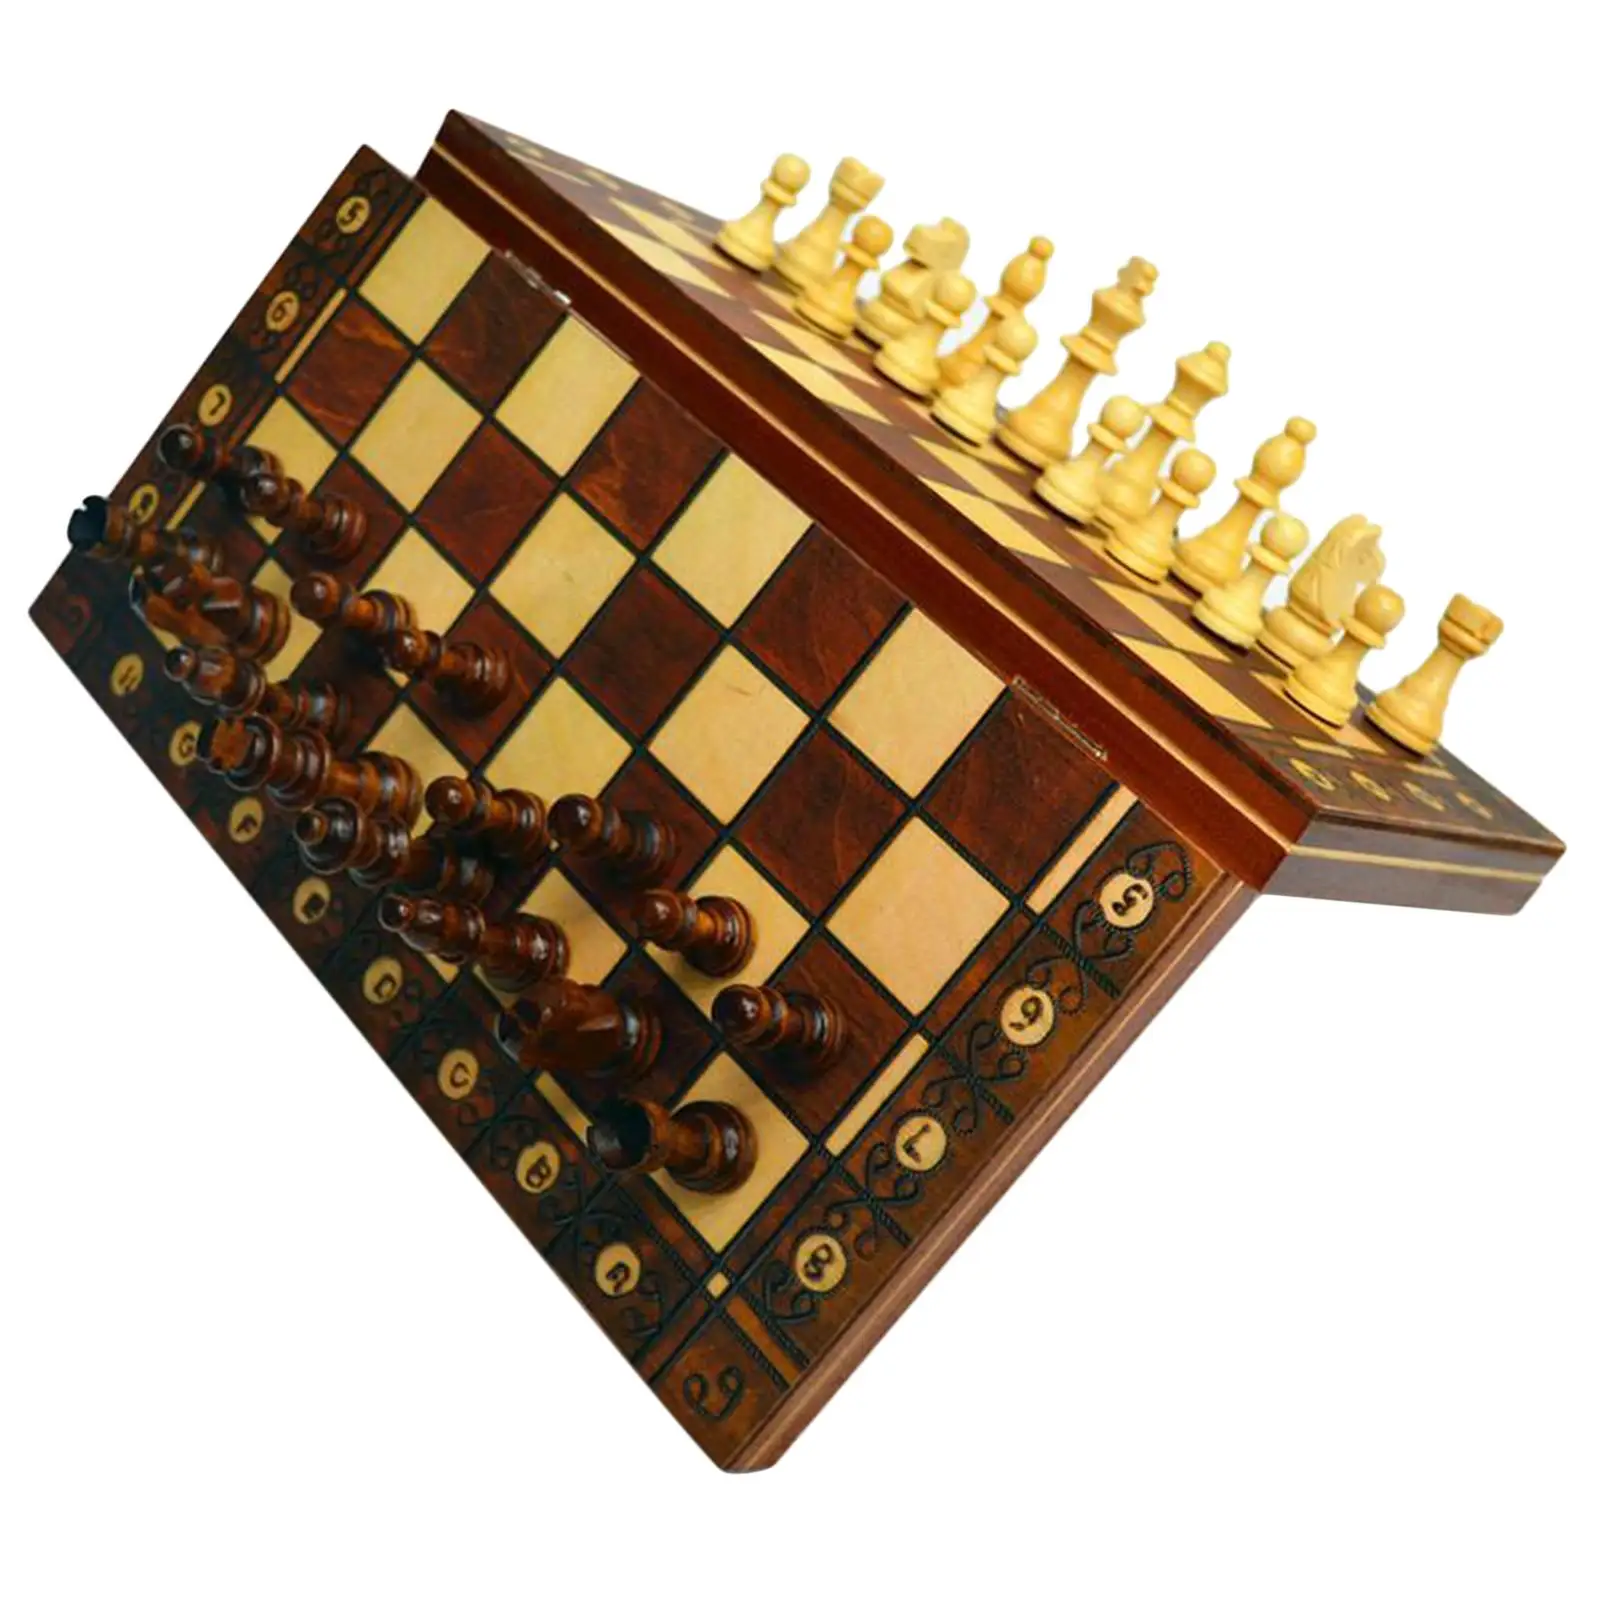 Chess Checkers Backgammon Folding Travel Wooden   13x13